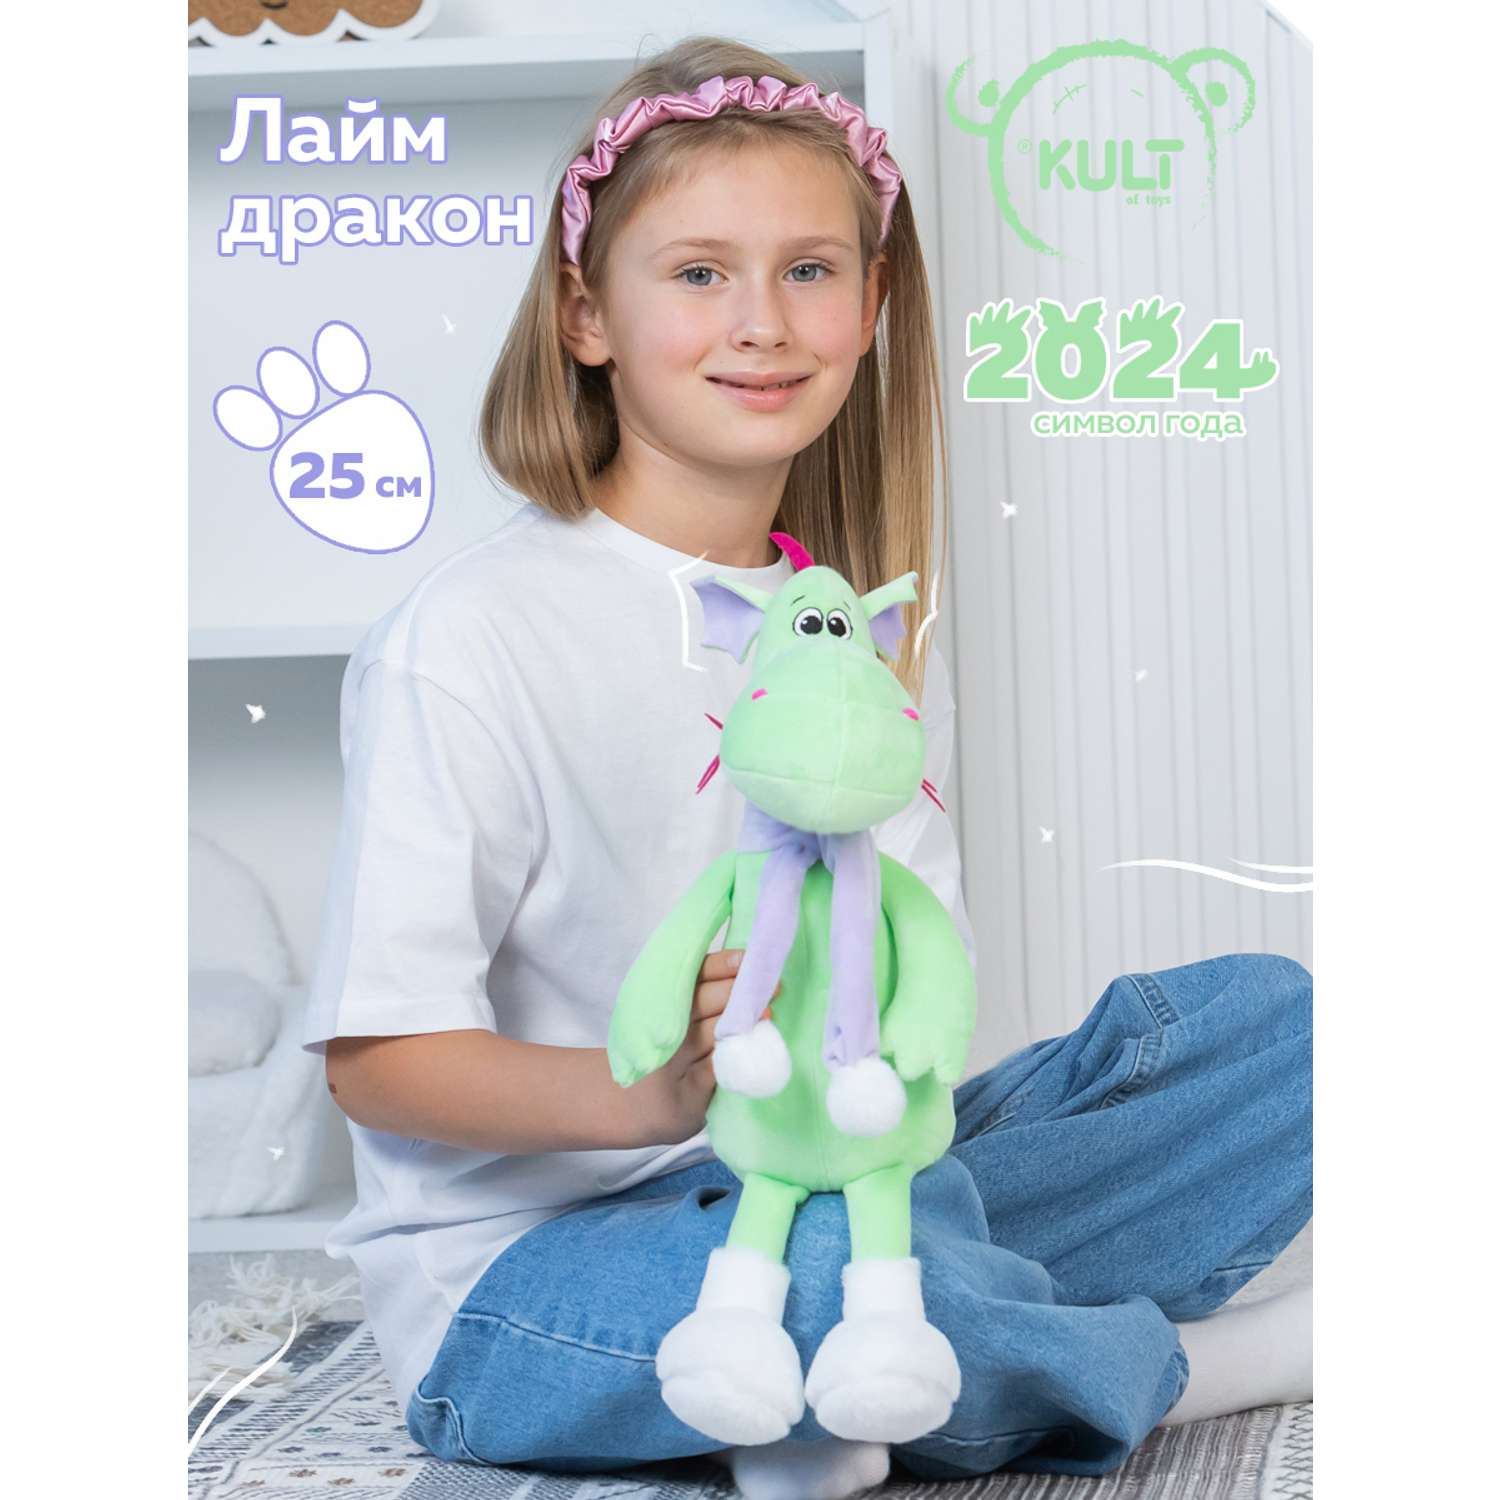 Мягкая игрушка KULT of toys Символ года 2024 Дракон Лайм в шарфе с помпоном 25 см - фото 1